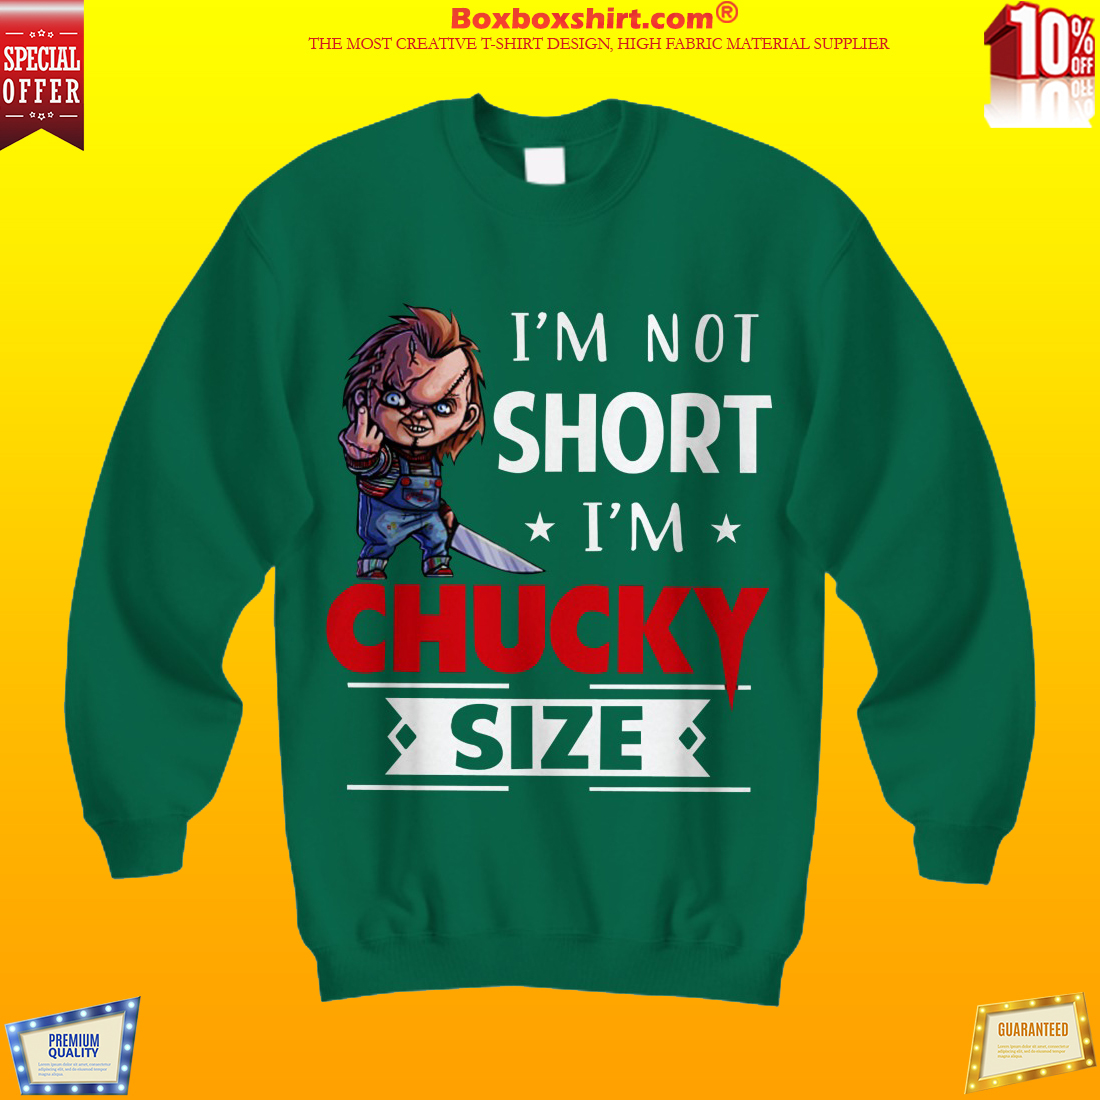 I'm not short Im Chucky size shirt and sweatshirt